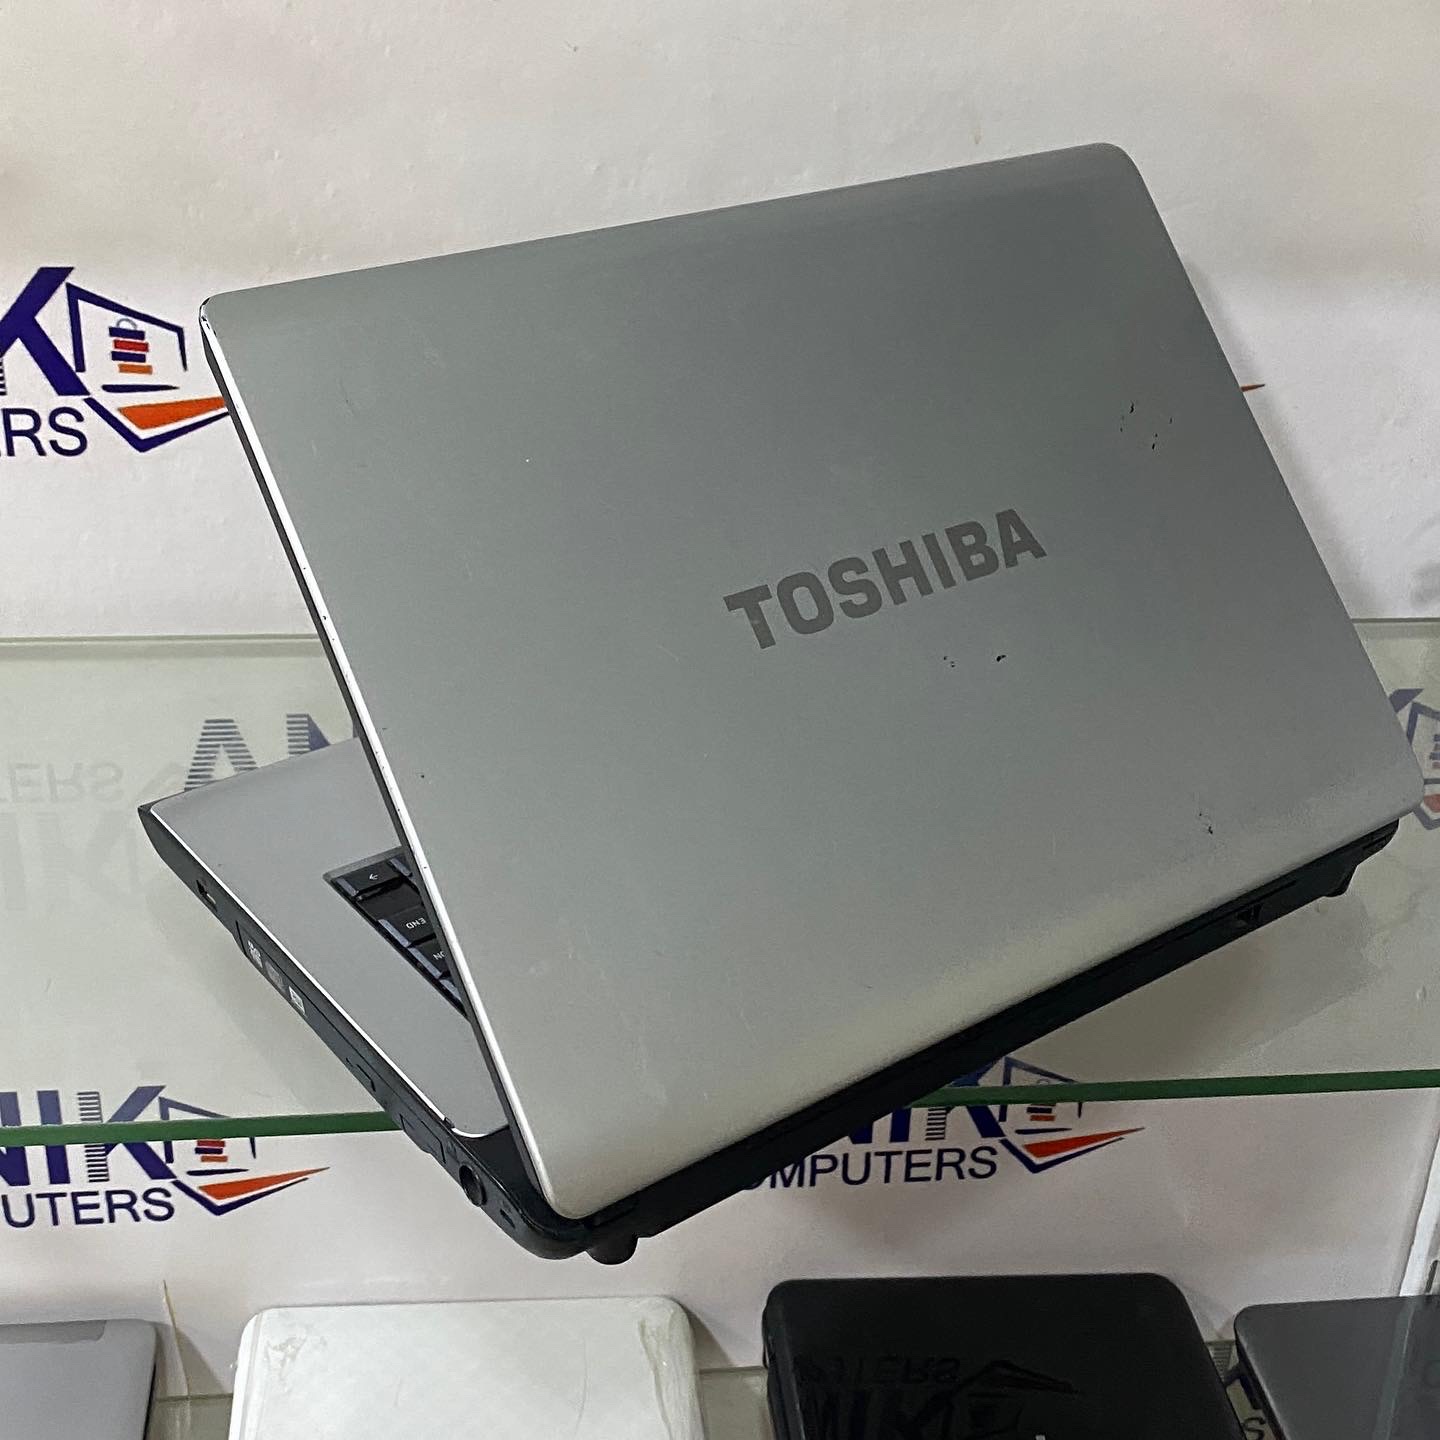 Toshiba Satellite laptop Specs